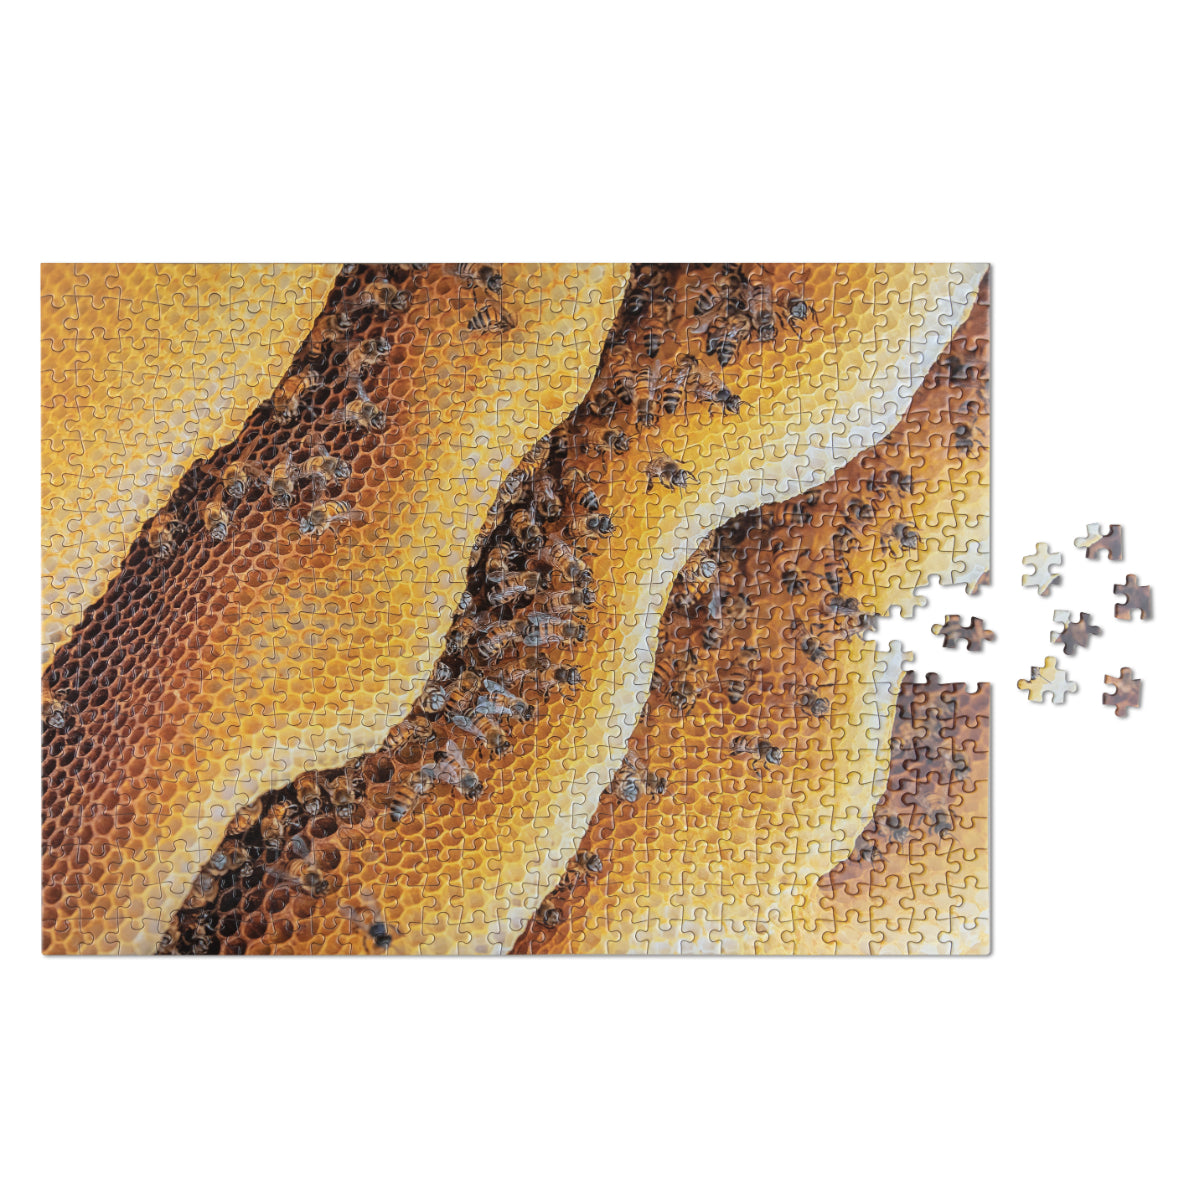 PRINTWORKS 野生動物 拼圖 - 蜜蜂 500塊 (52x38cm)